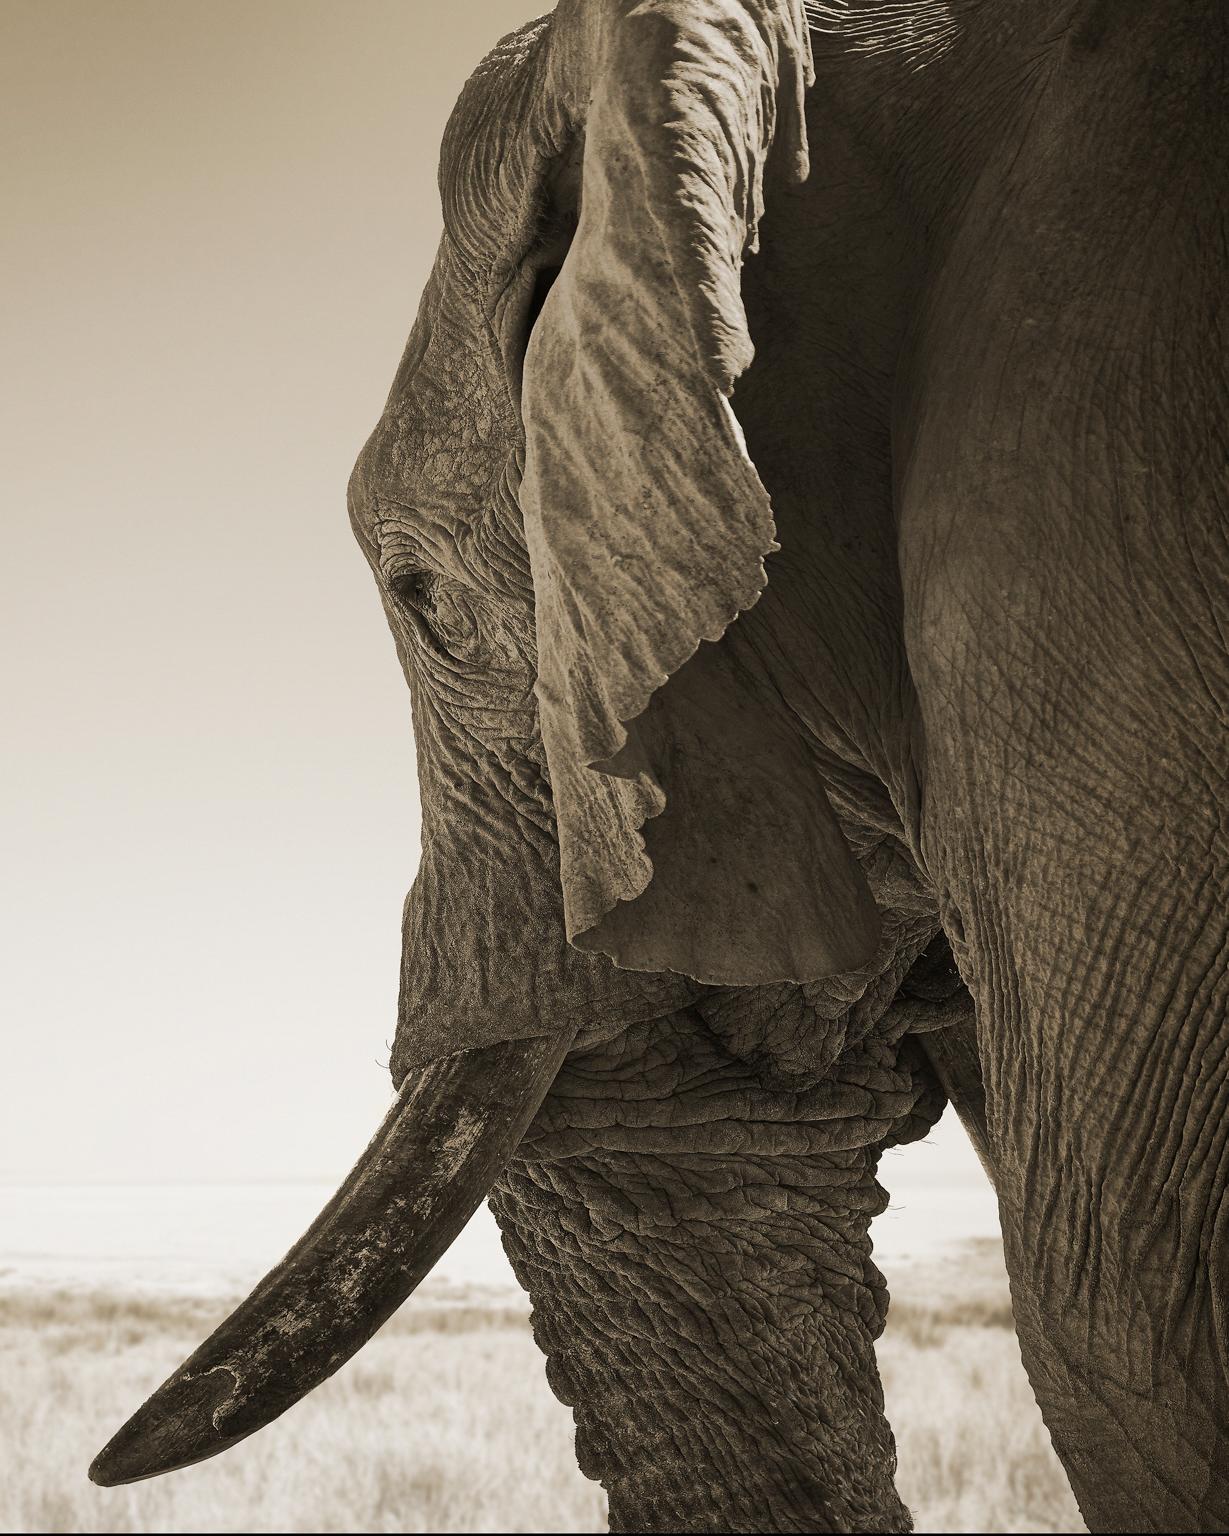 Chris Gordaneer Portrait Photograph – Elefant-02, Namibia